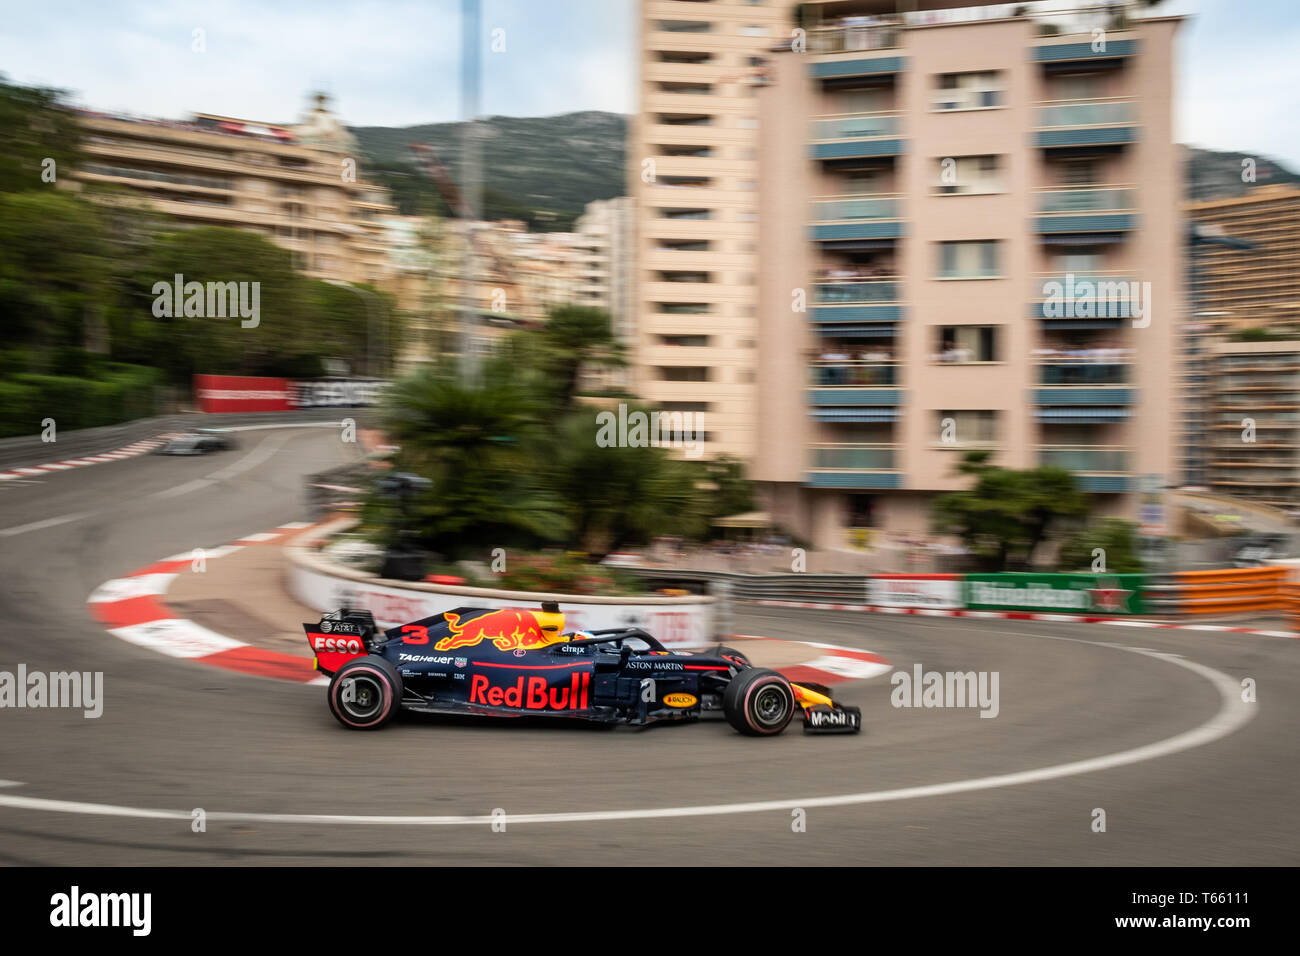 Monte Carlo / Monaco - 05/27/2018 - #3 Daniel Ricciardo (AUS) in seinem Red Bull Racing RB14 währenddes GP Monaco Stockfoto